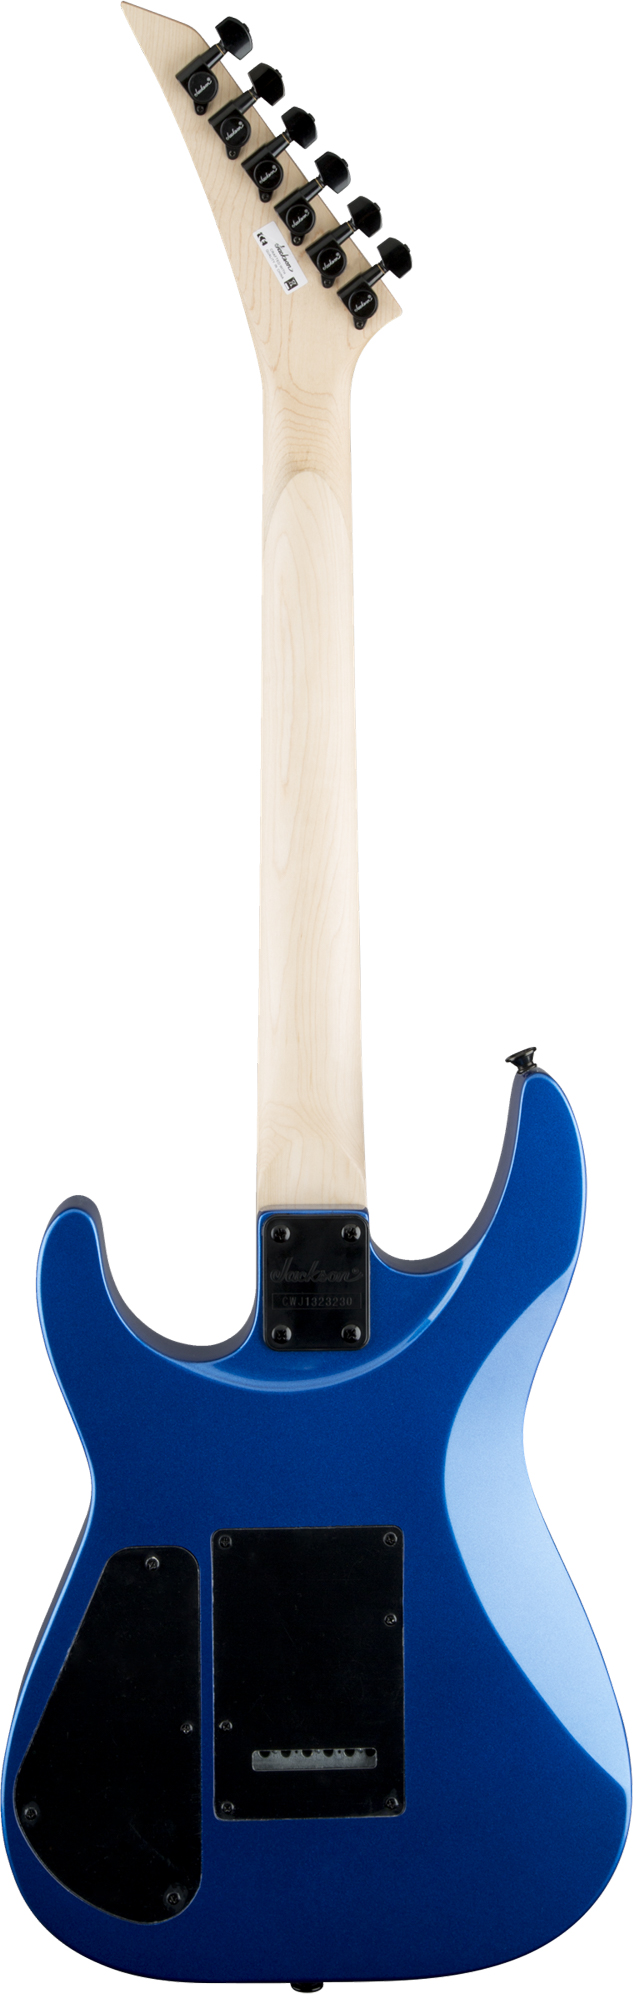 Jackson JS11 Dinky Electric Guitar - Metallic Blue 885978976744 | eBay